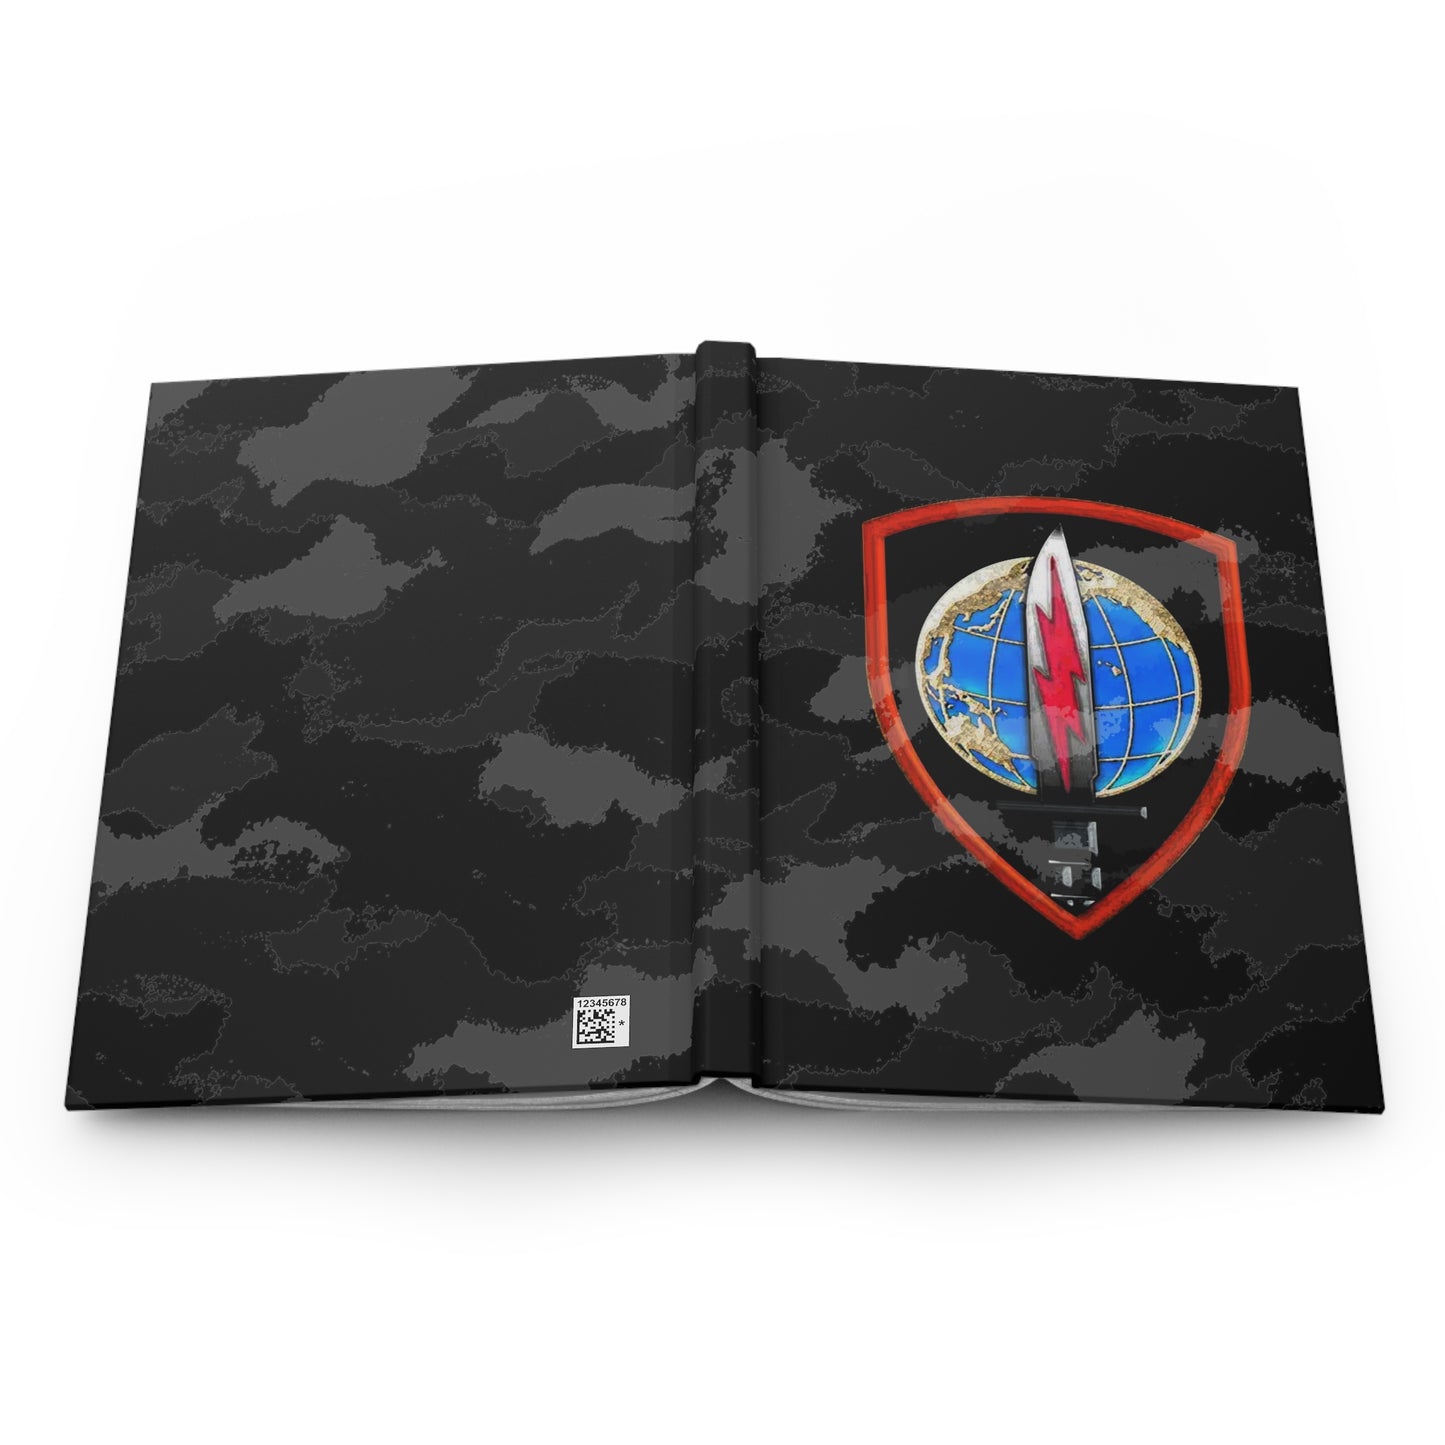 USINDOPACOM Army Element Concealed Camo Hardcover Leader Book